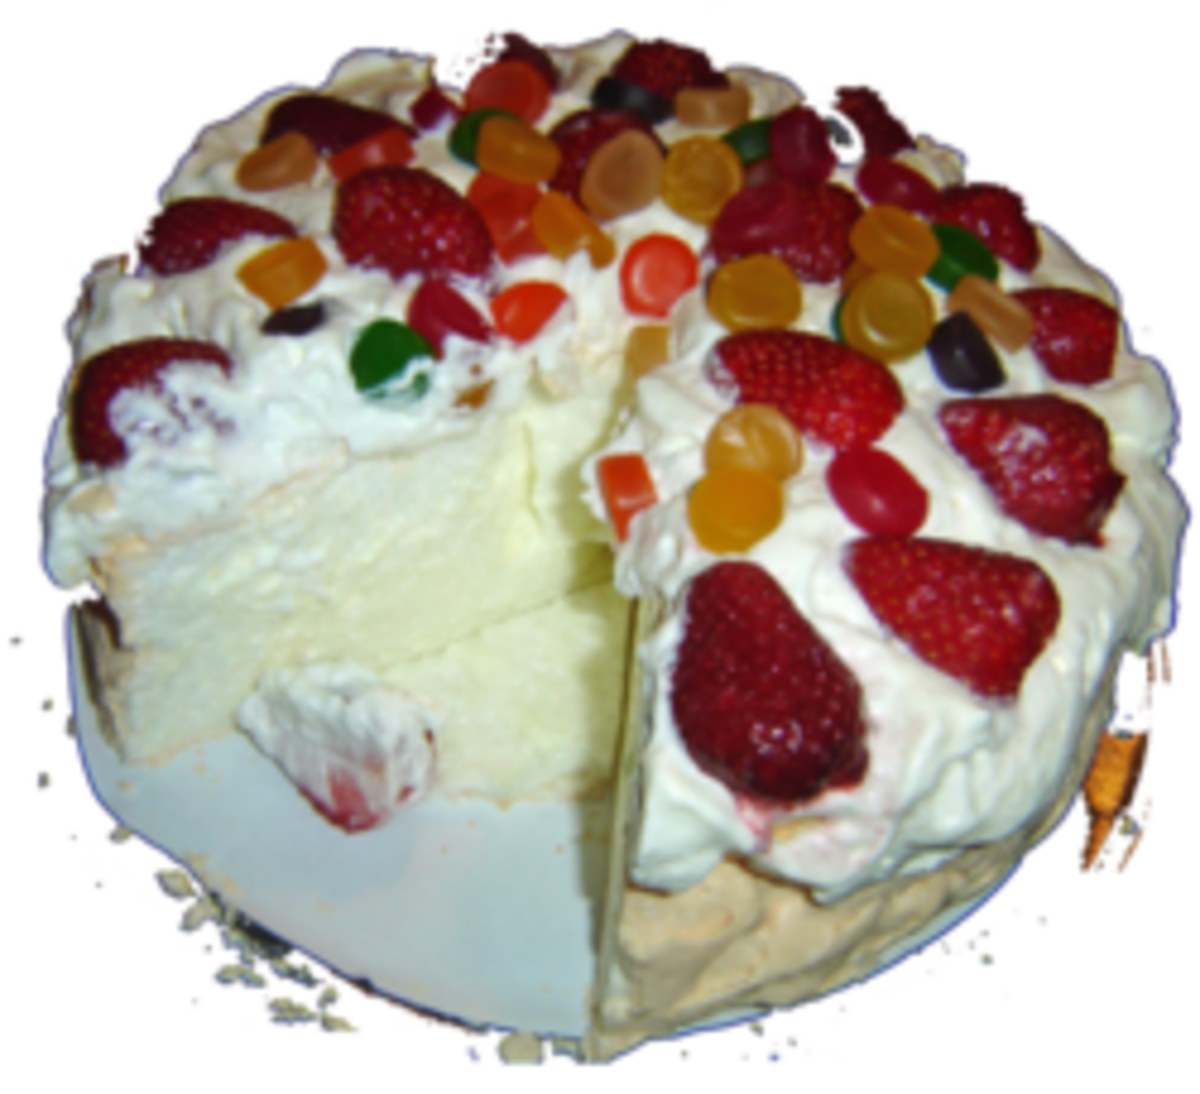 Pavlova with berries and cream